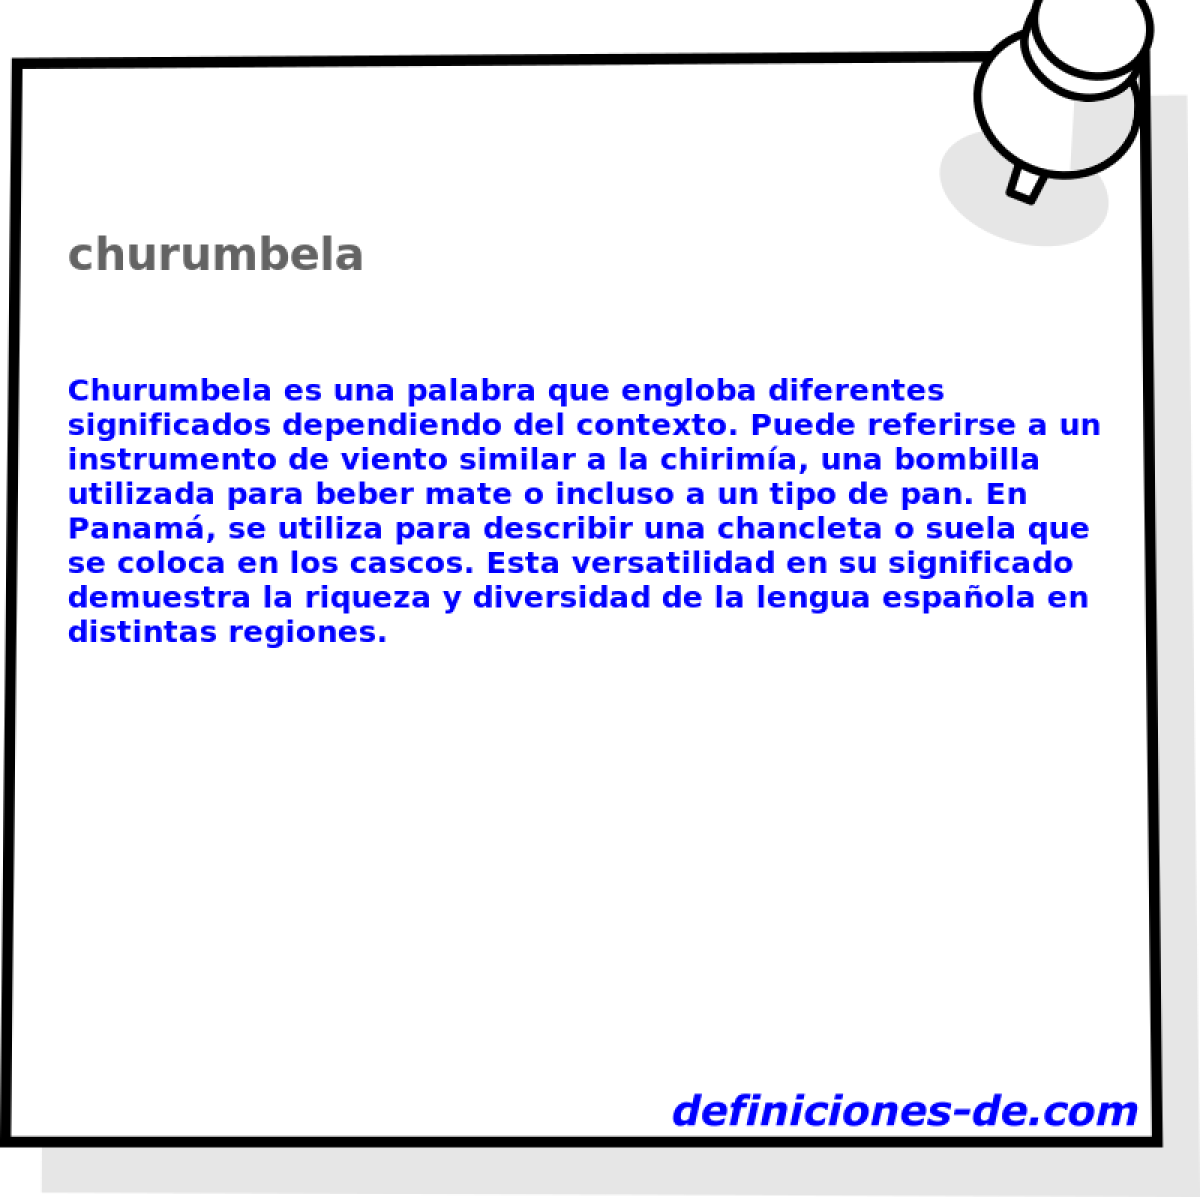 churumbela 